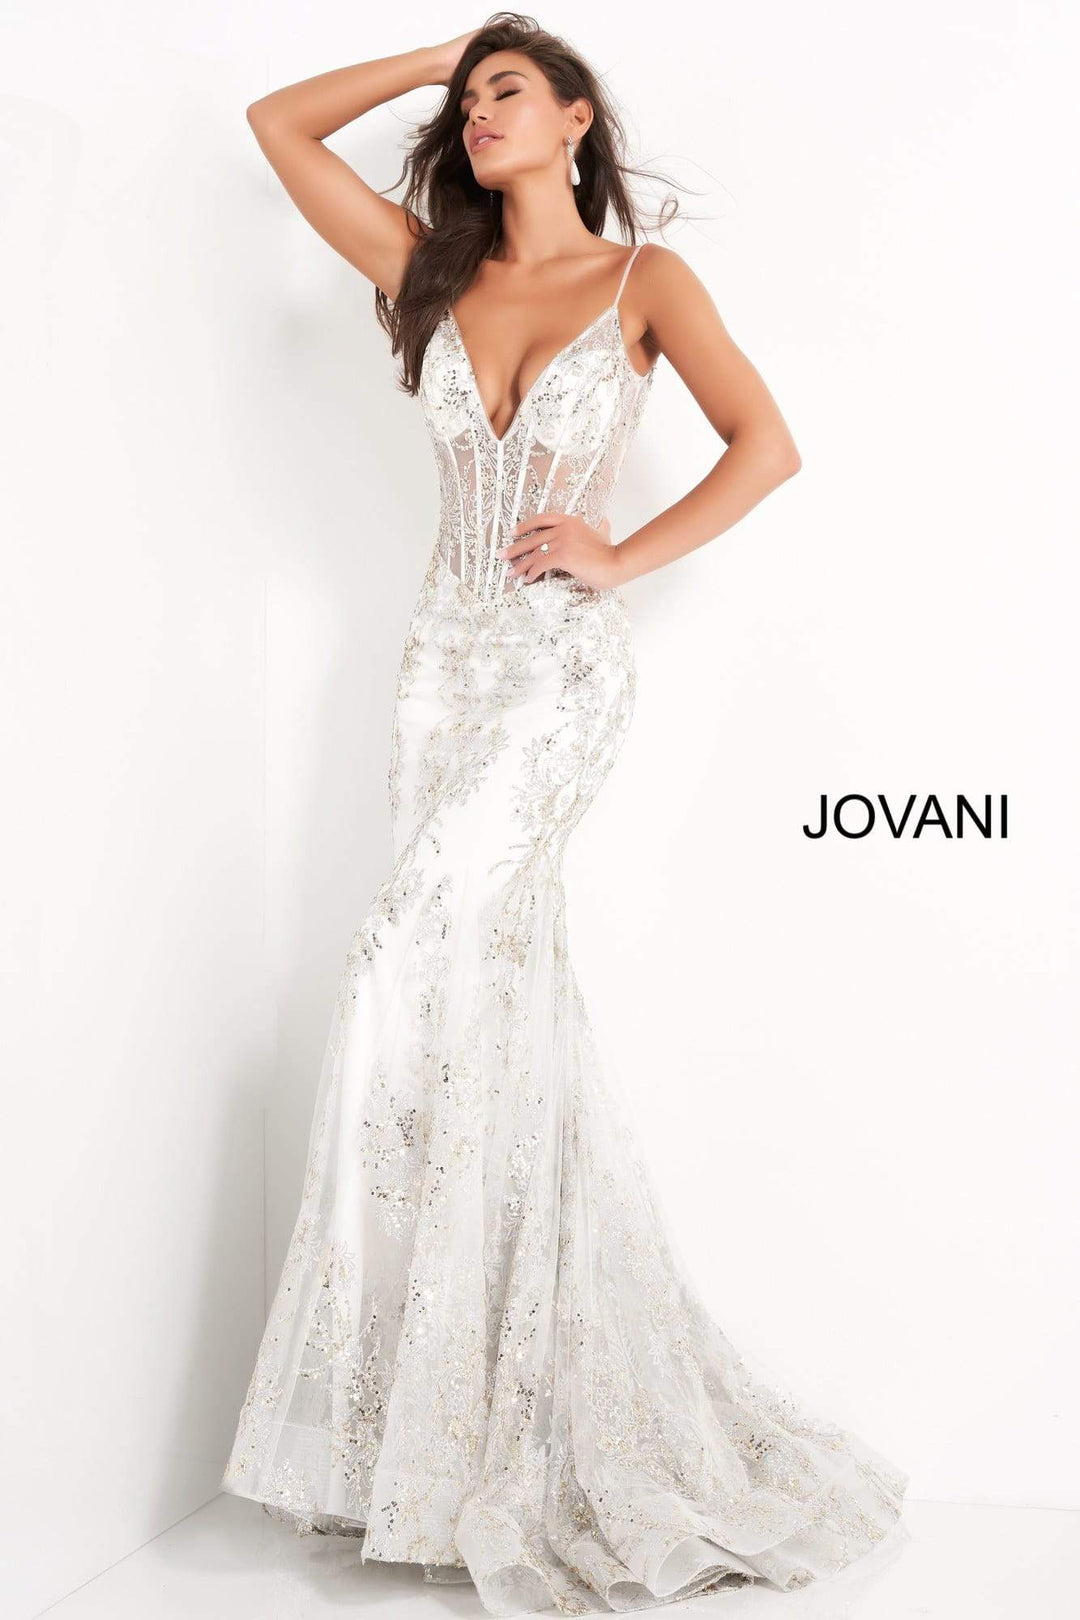 Jovani 3675 Dress - FOSTANI